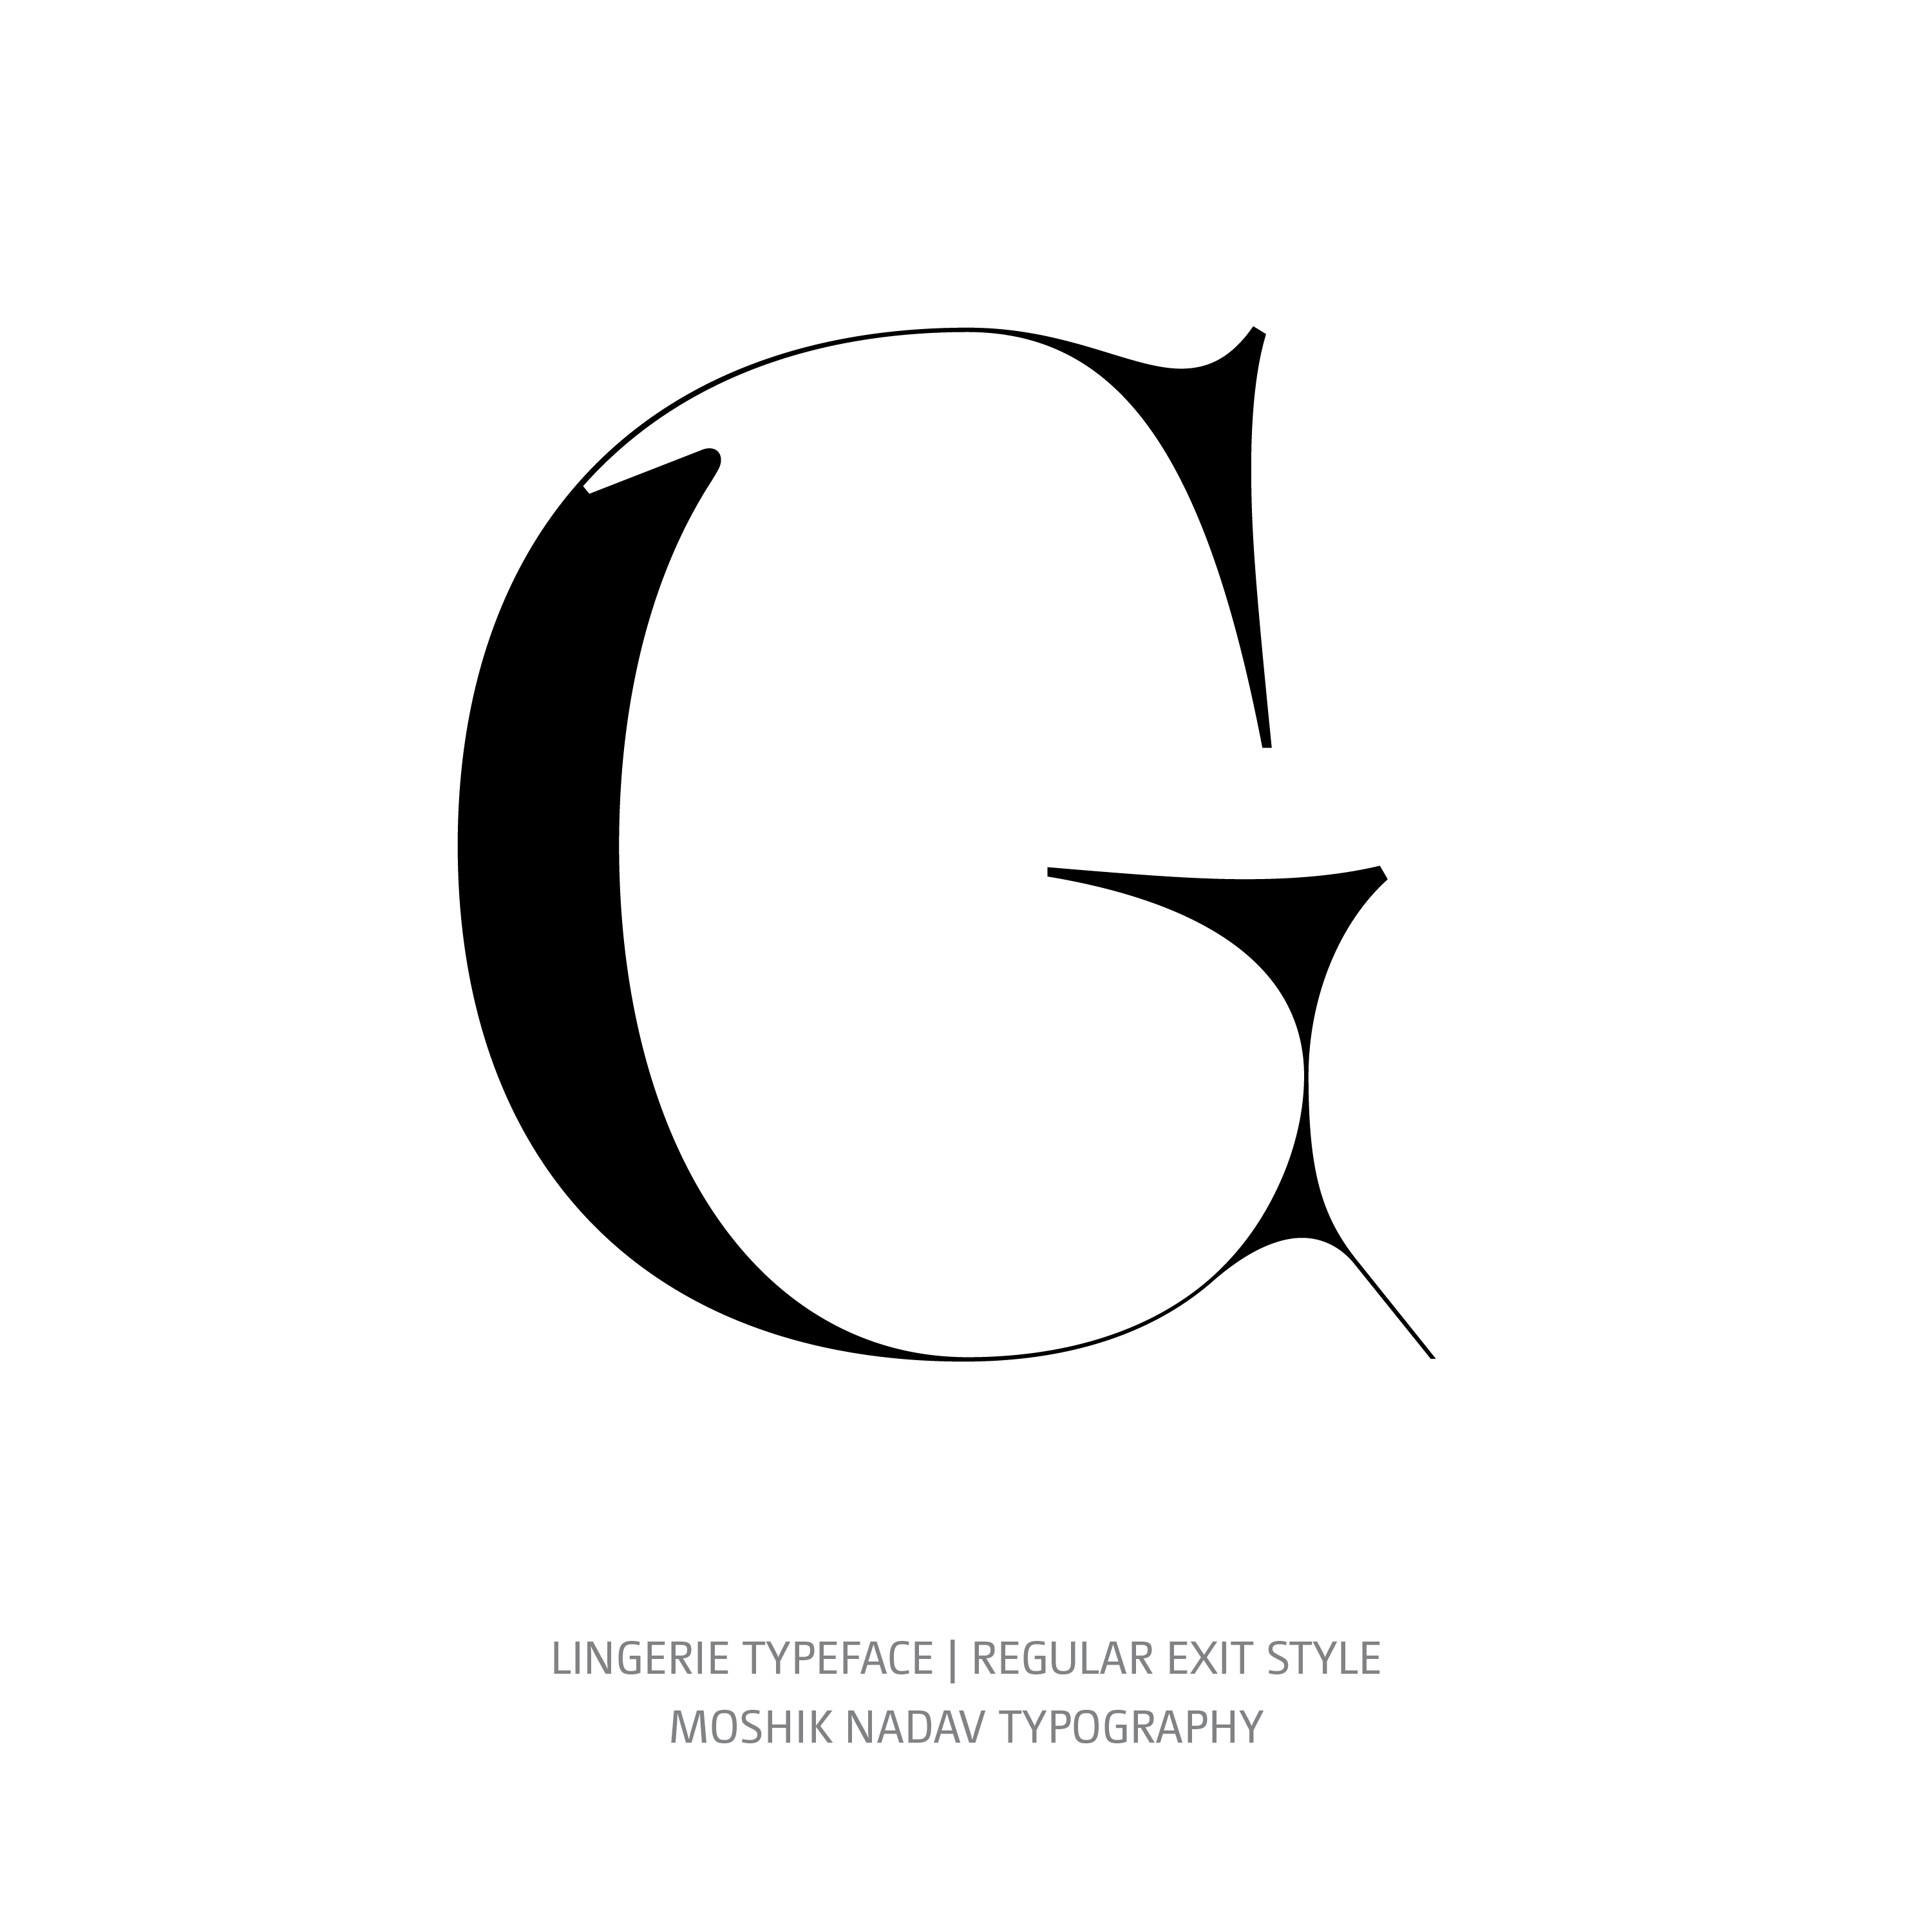 Lingerie Typeface Regular Exit G